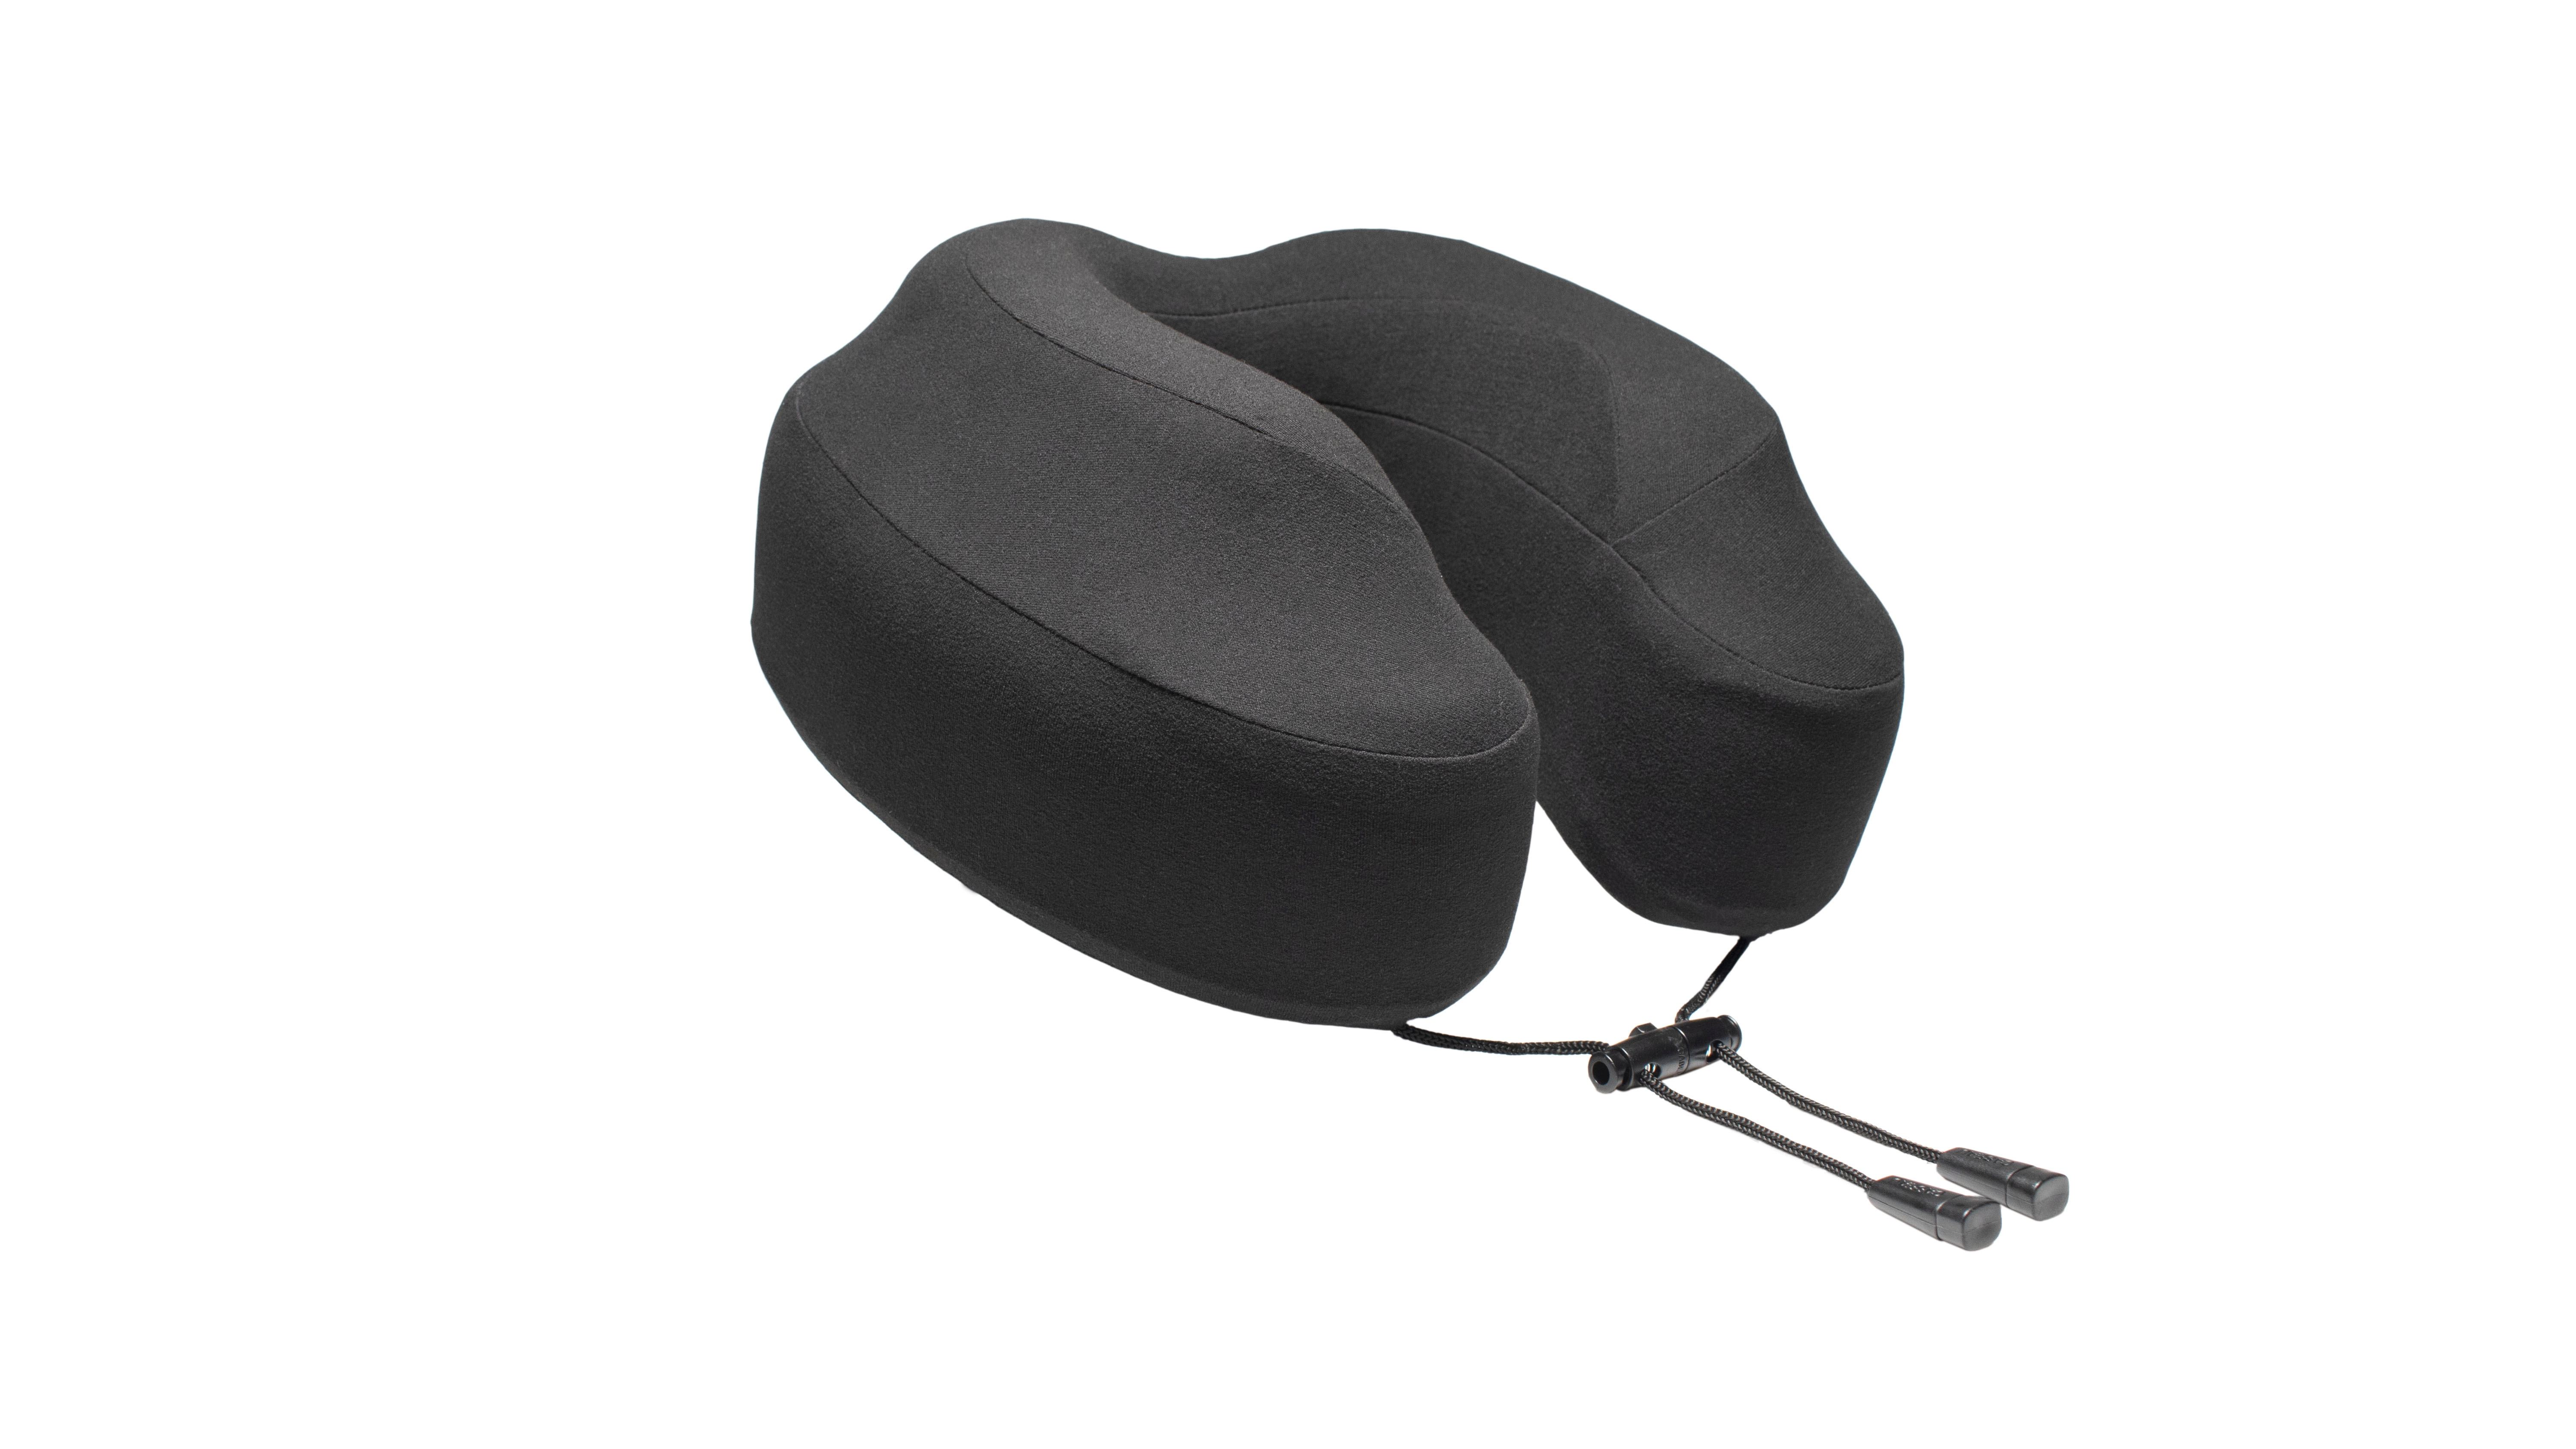 korjo evolution seat strap system travel pillow black